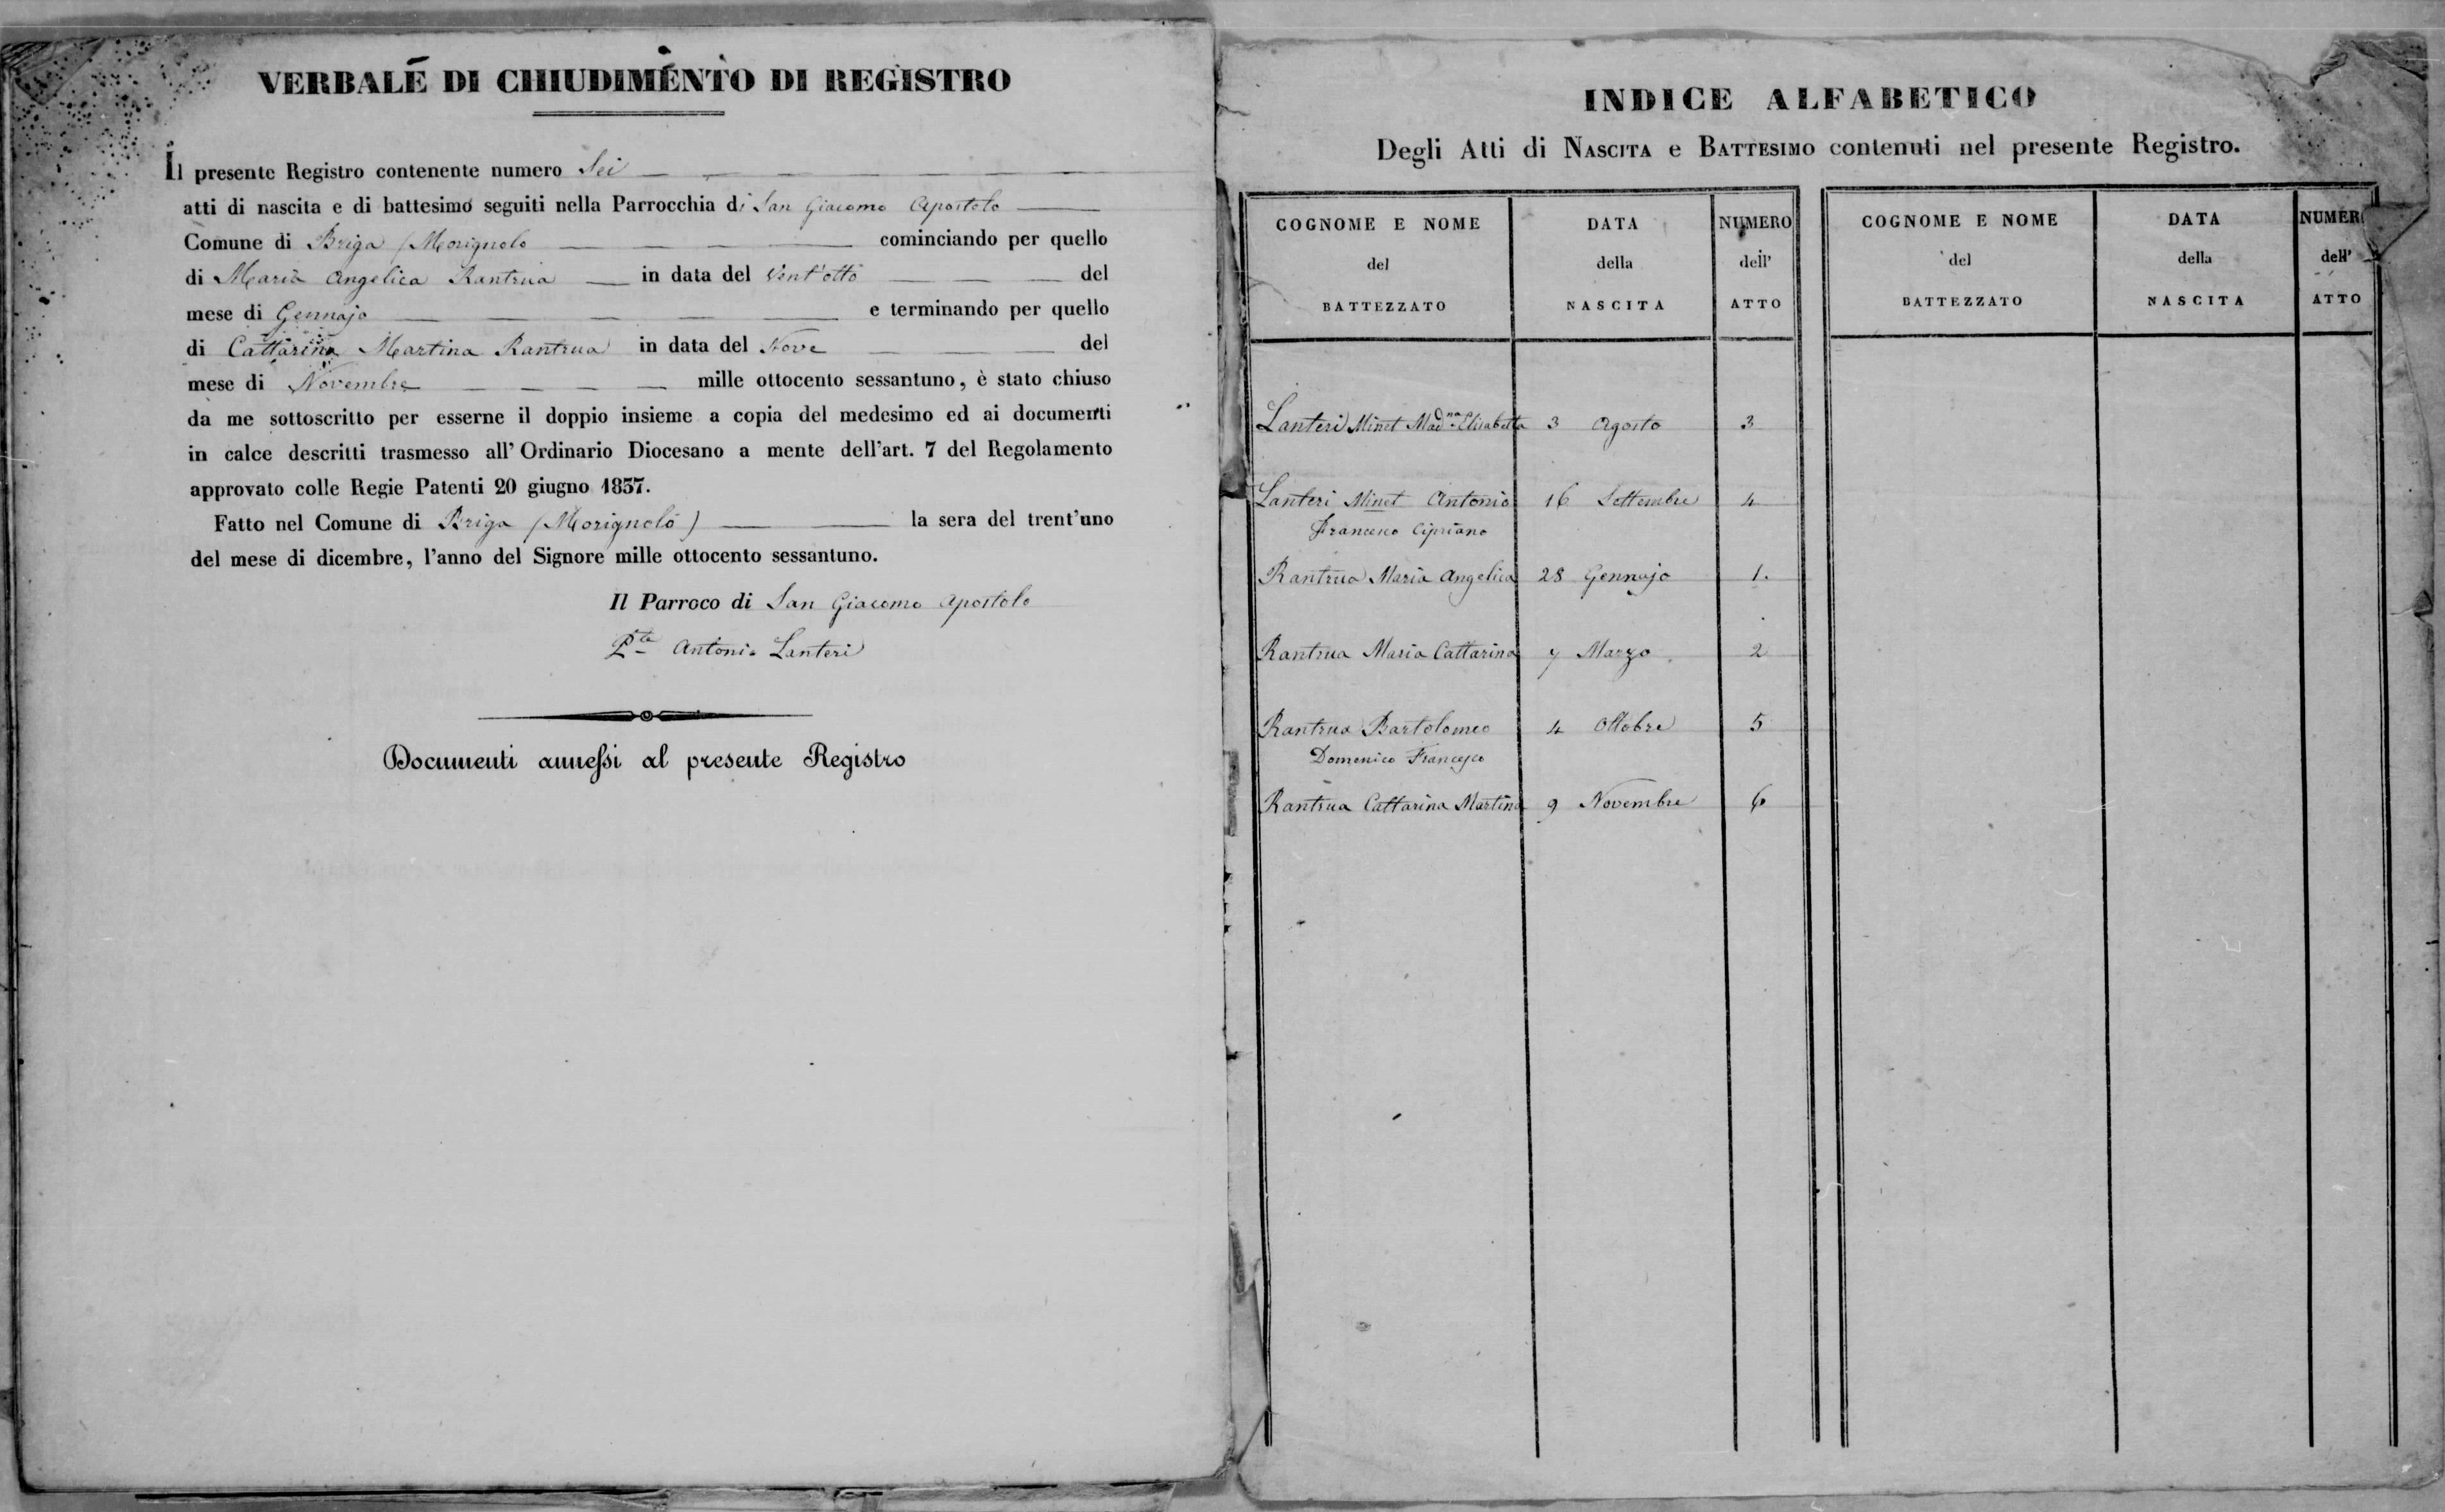 registre 1861